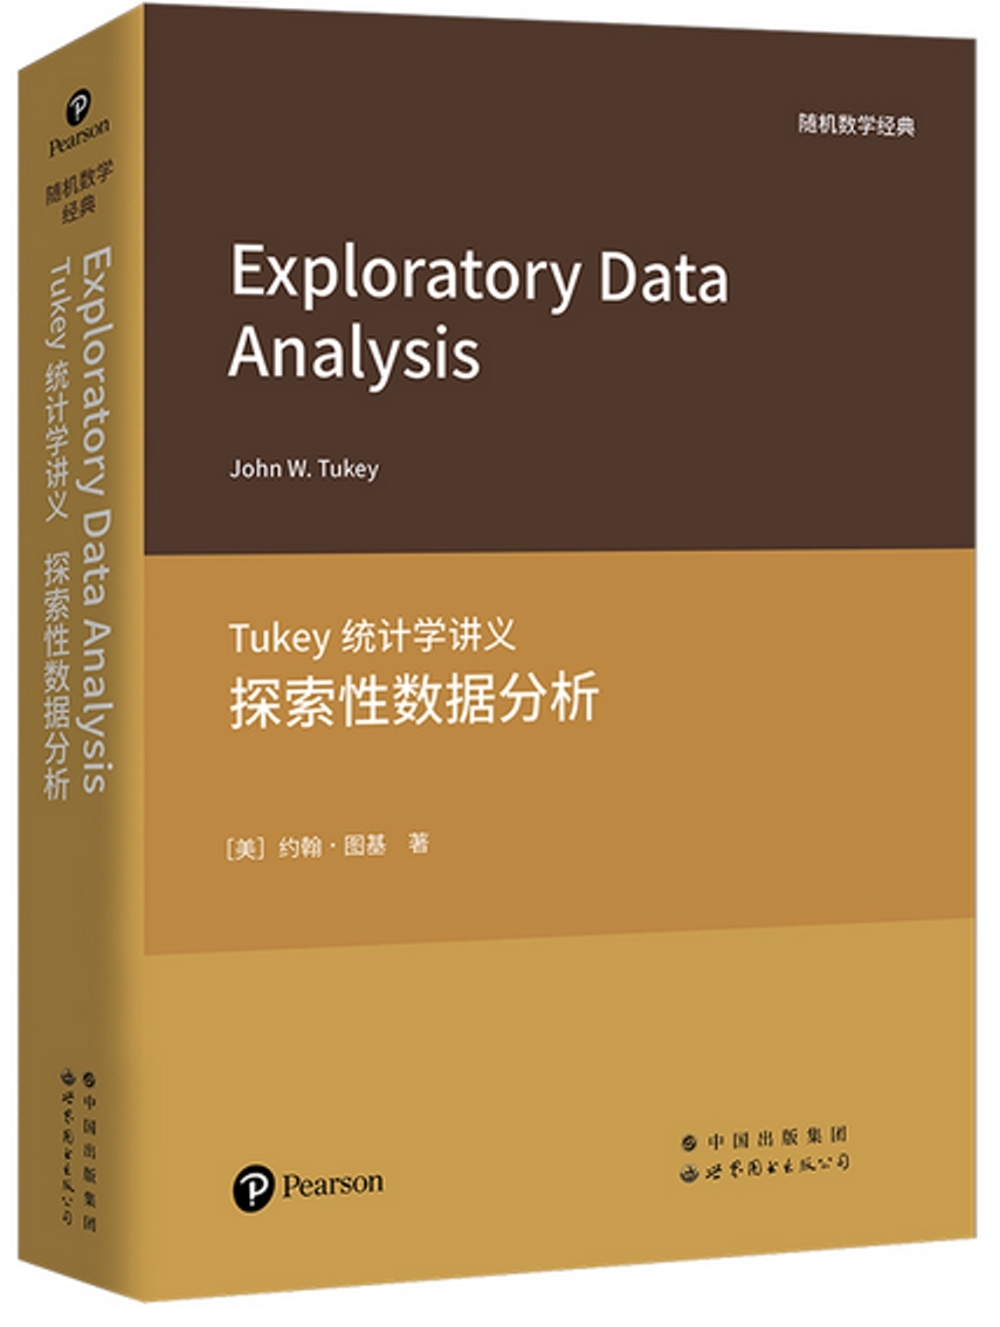 Tukey統計學講義：探索性數據分析